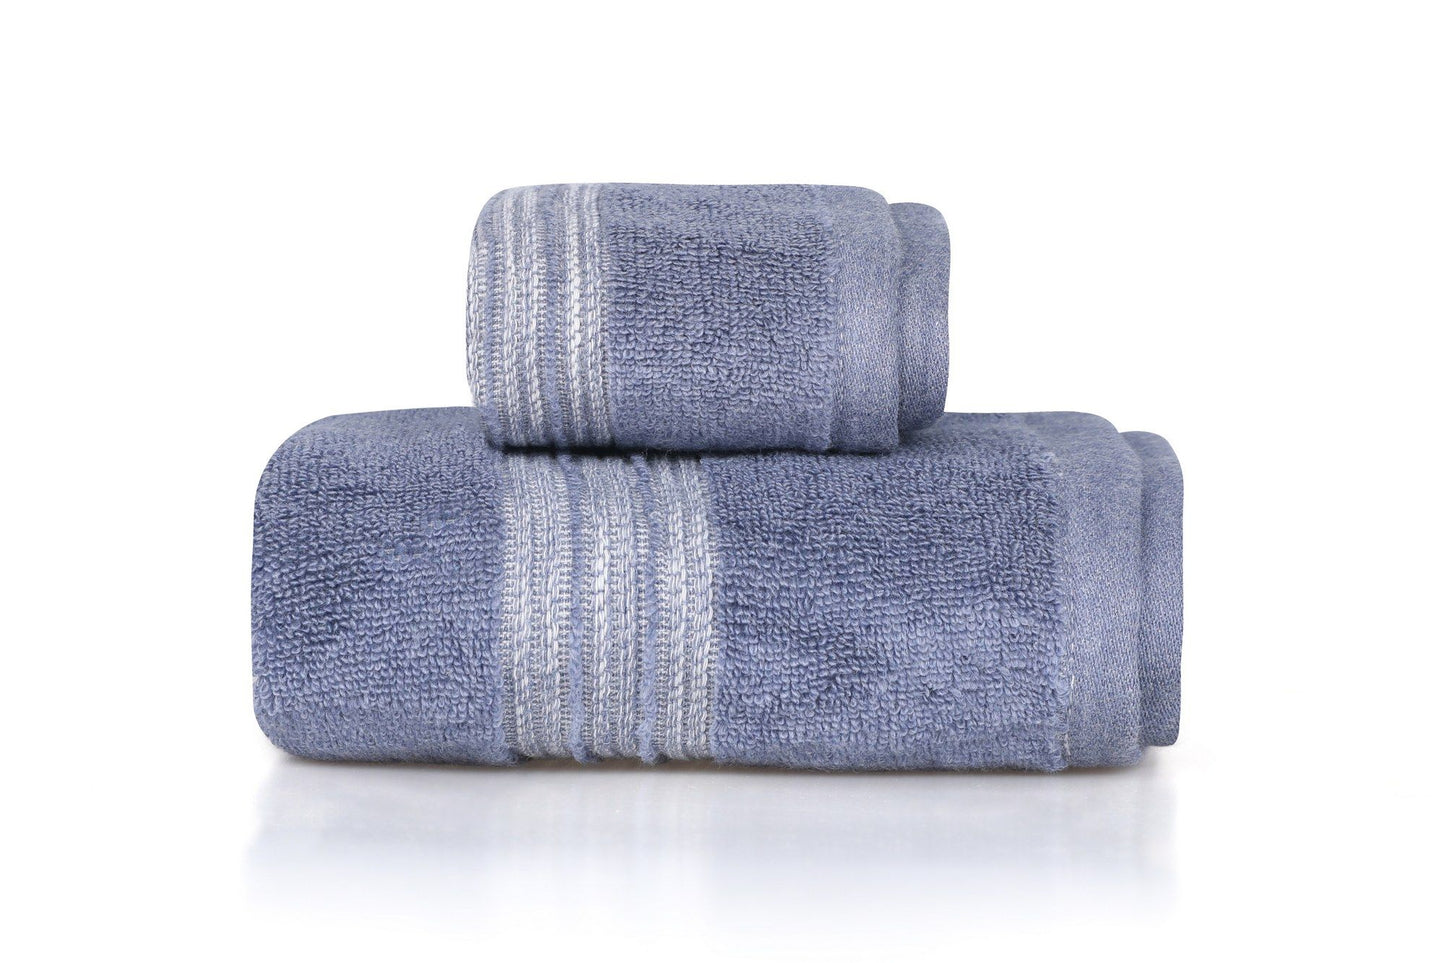 Håndklædesæt - Antik, Blå